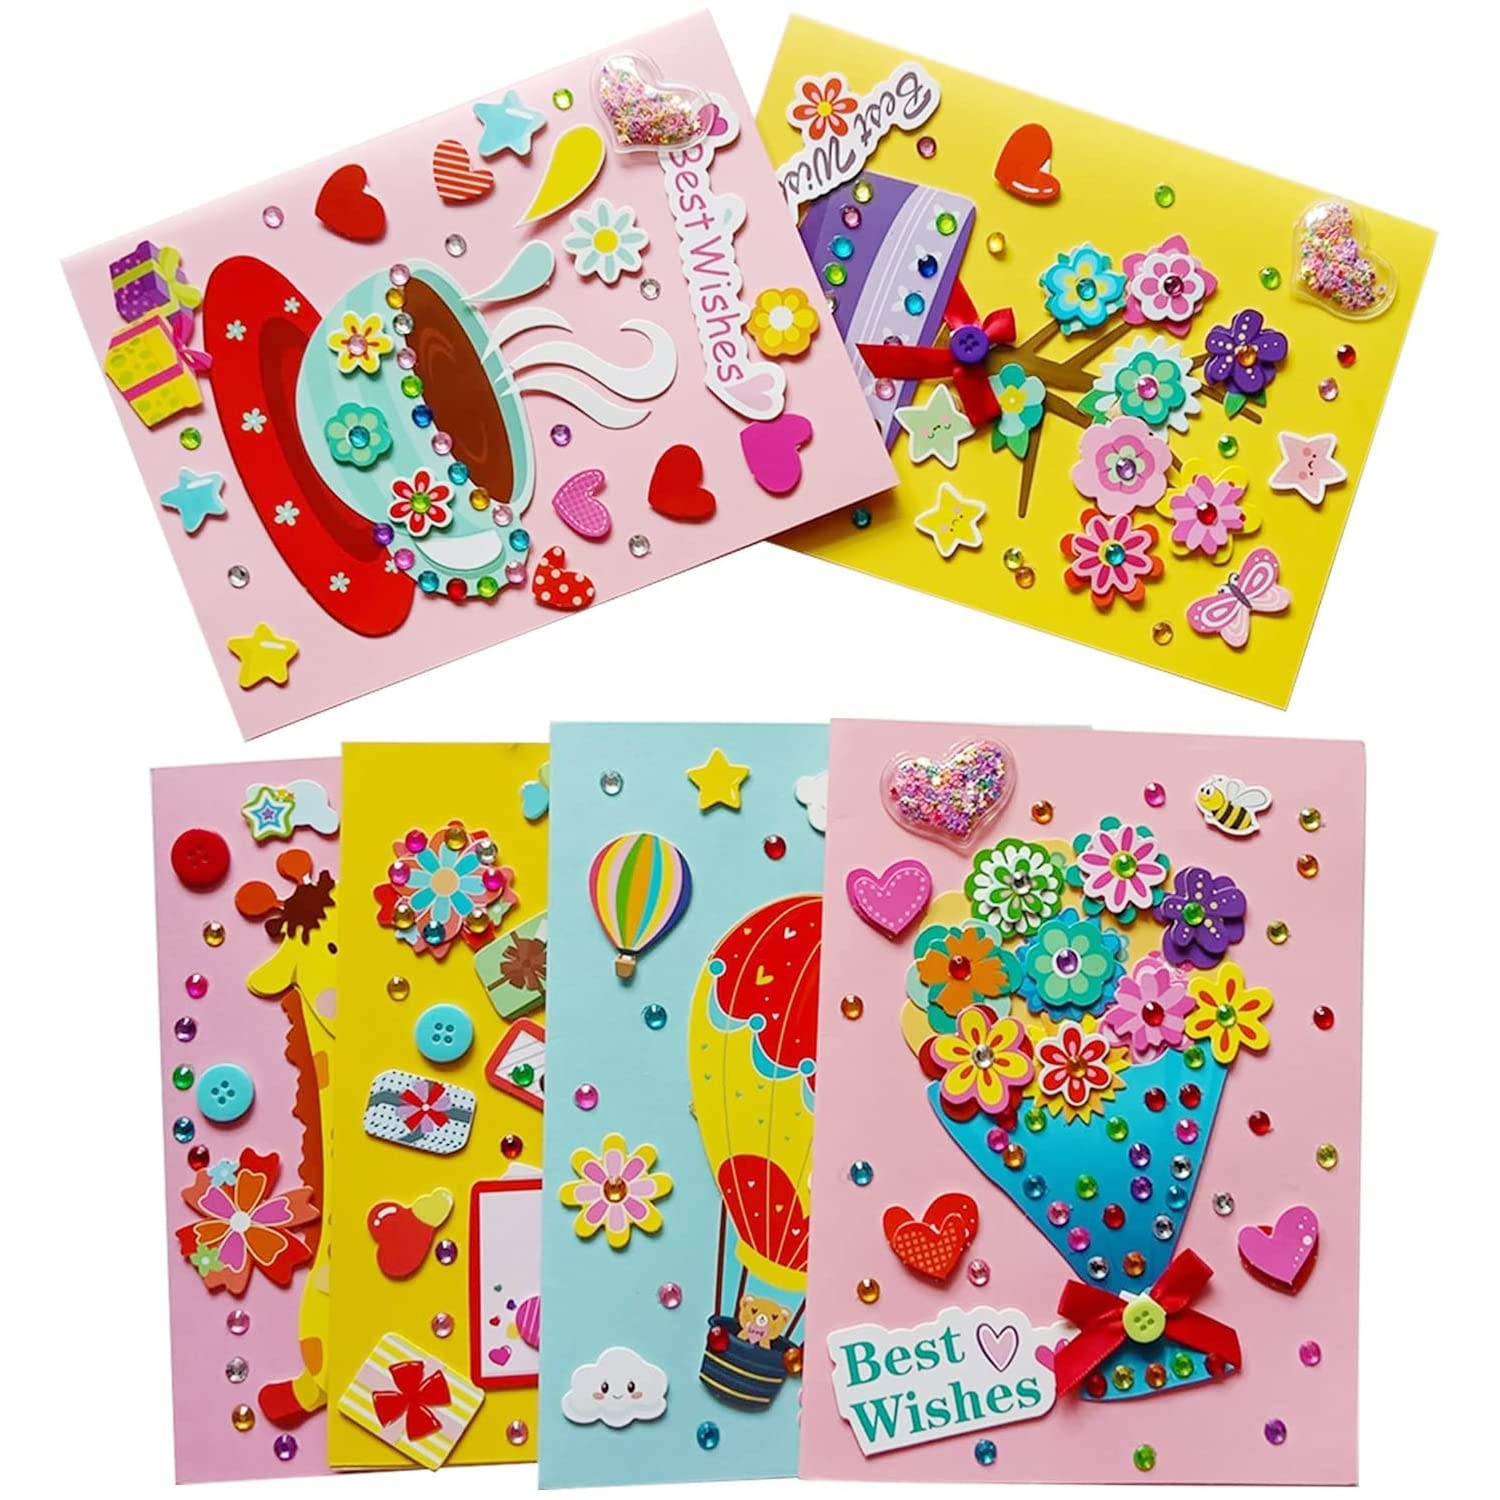 SHUSAY 6 Pcs Card Making Kits for Kids Greeting Card Making Kit